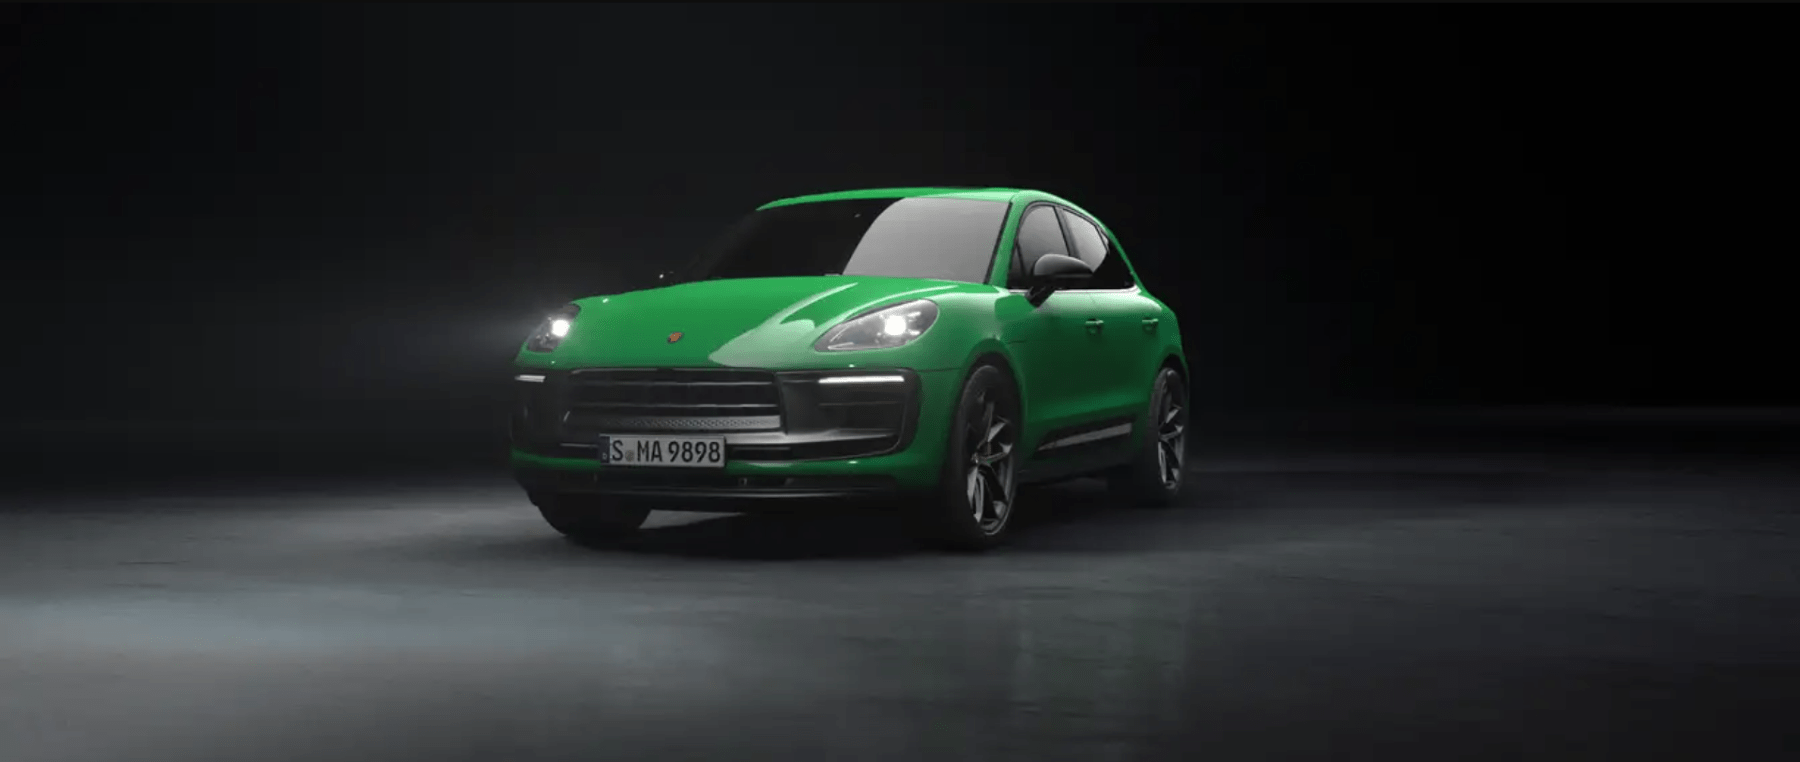 A green 2023 Porsche Macan luxury compact SUV promotional photo in a dark black void